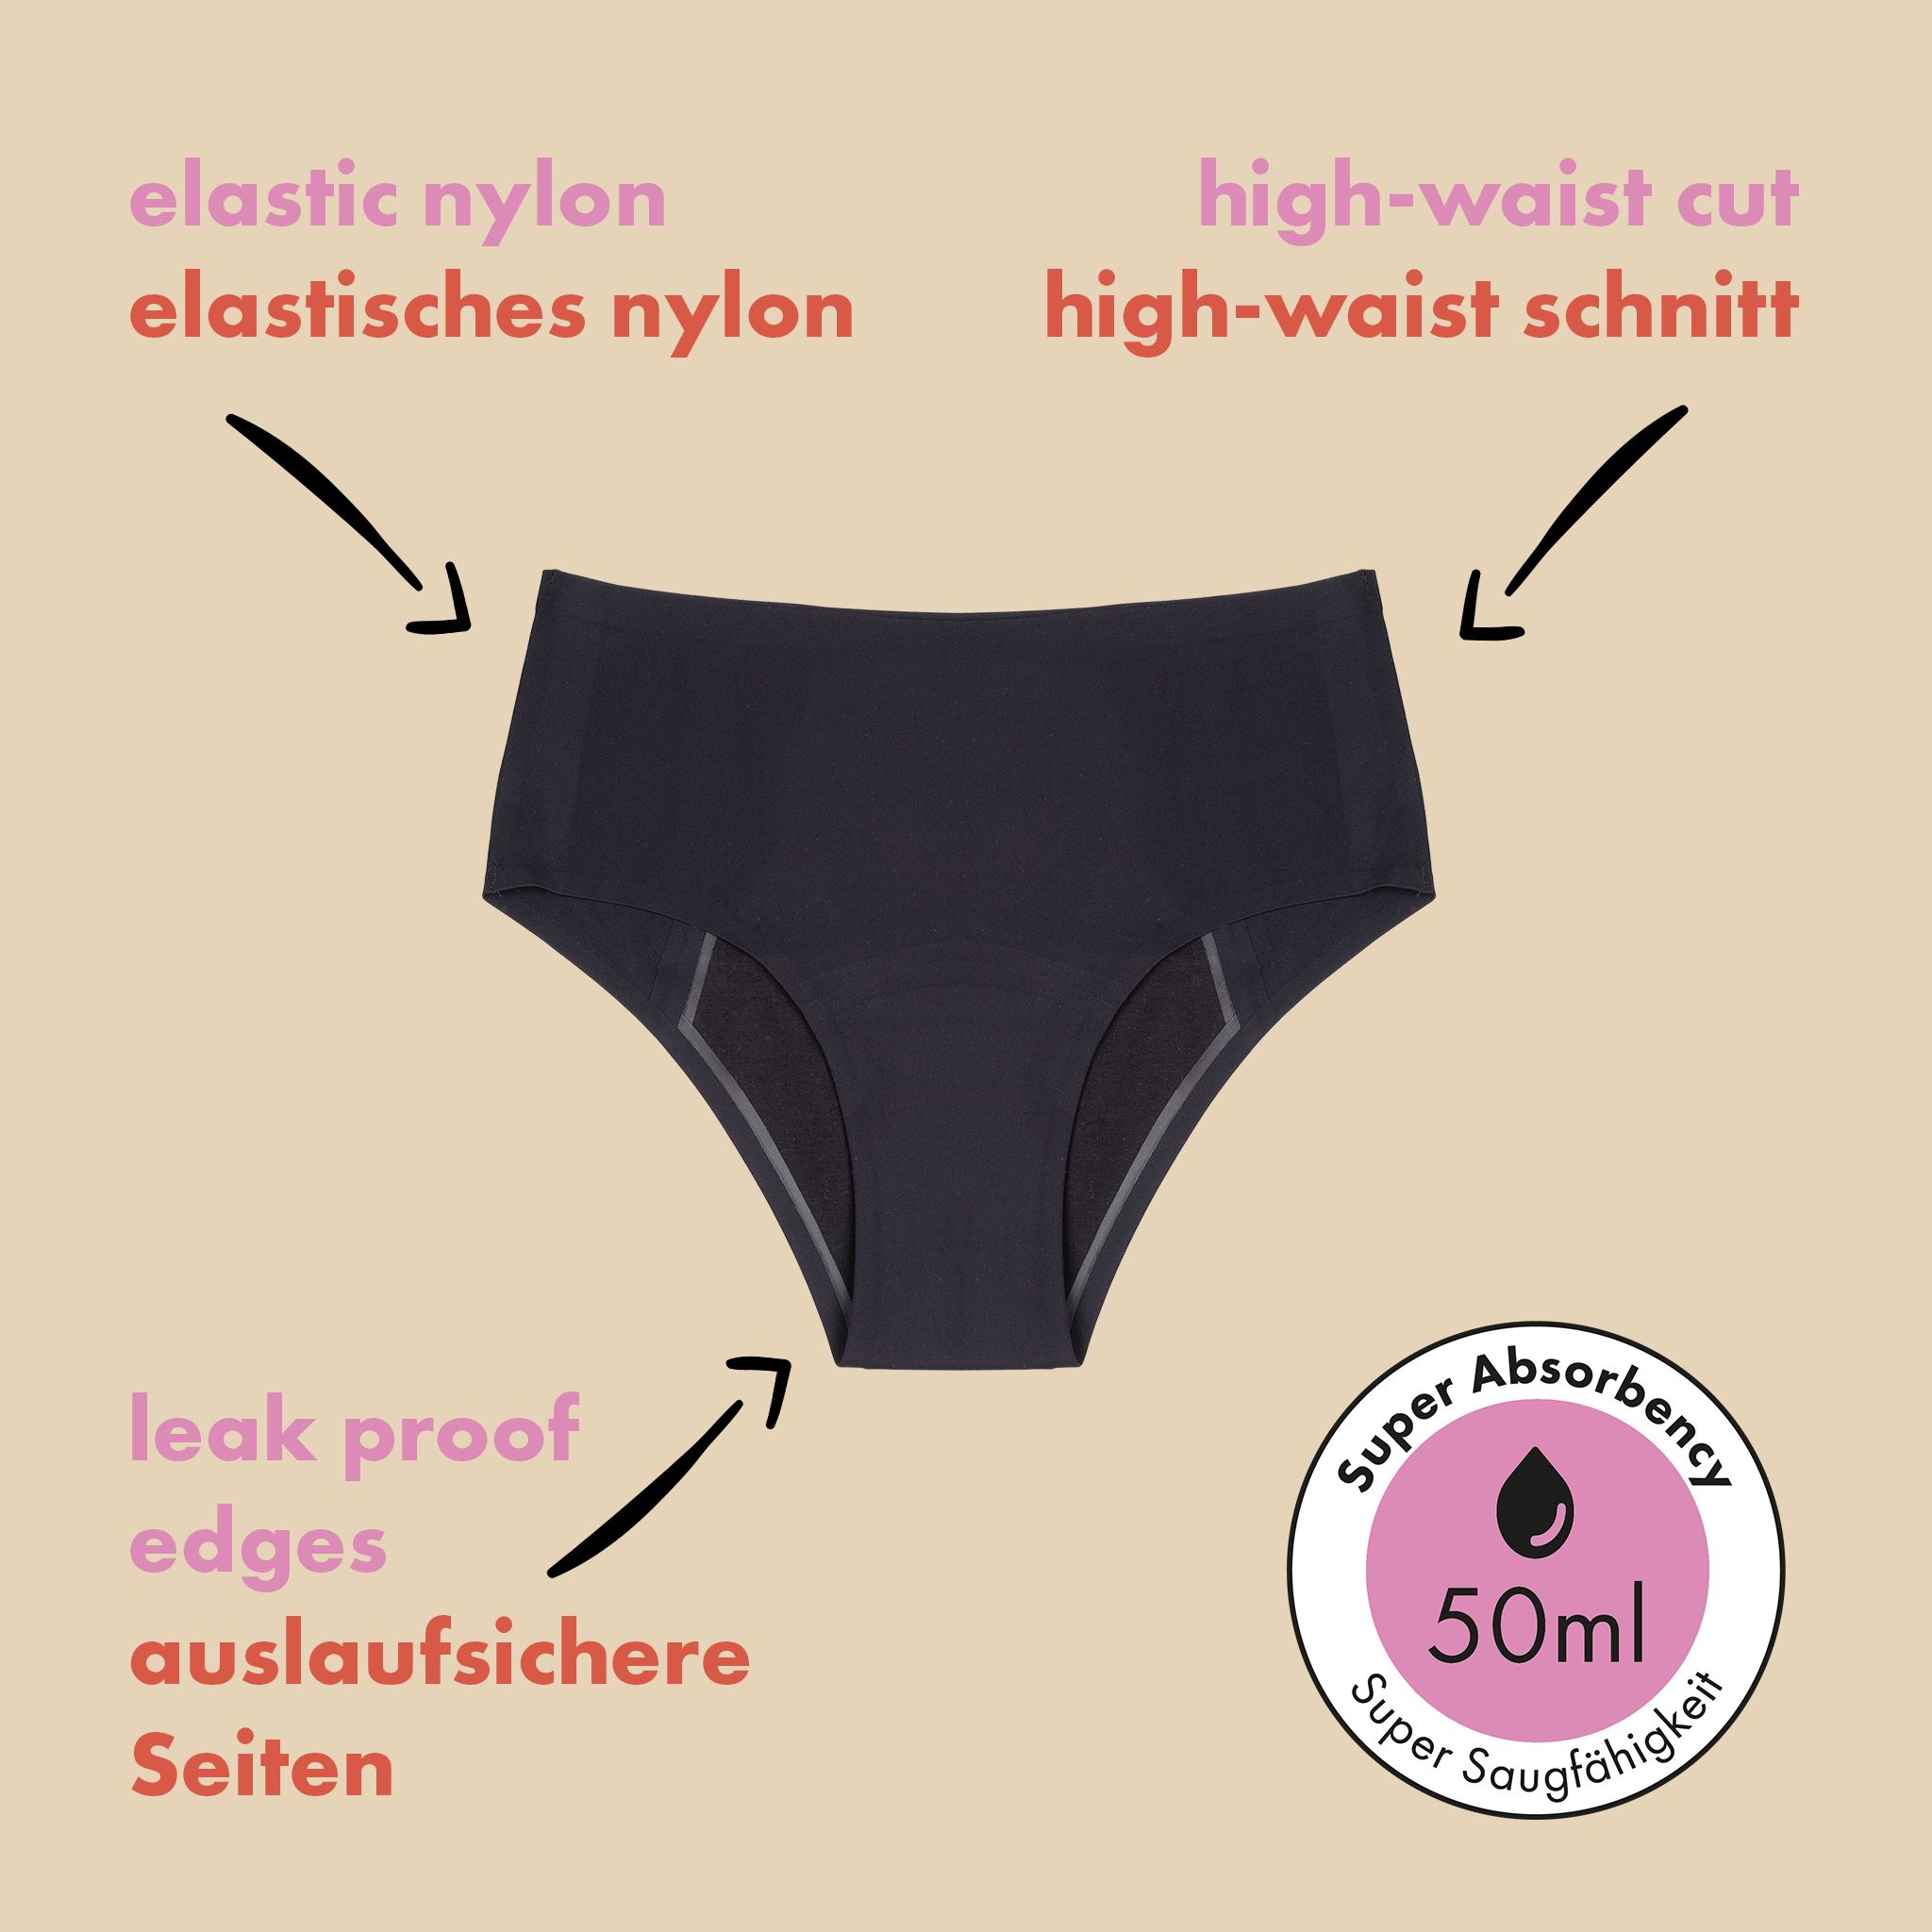 dais bladder leak underwear showing the benefits of elastic nylon, high-waist cut, leak proof edges and super absorbency of 50ml